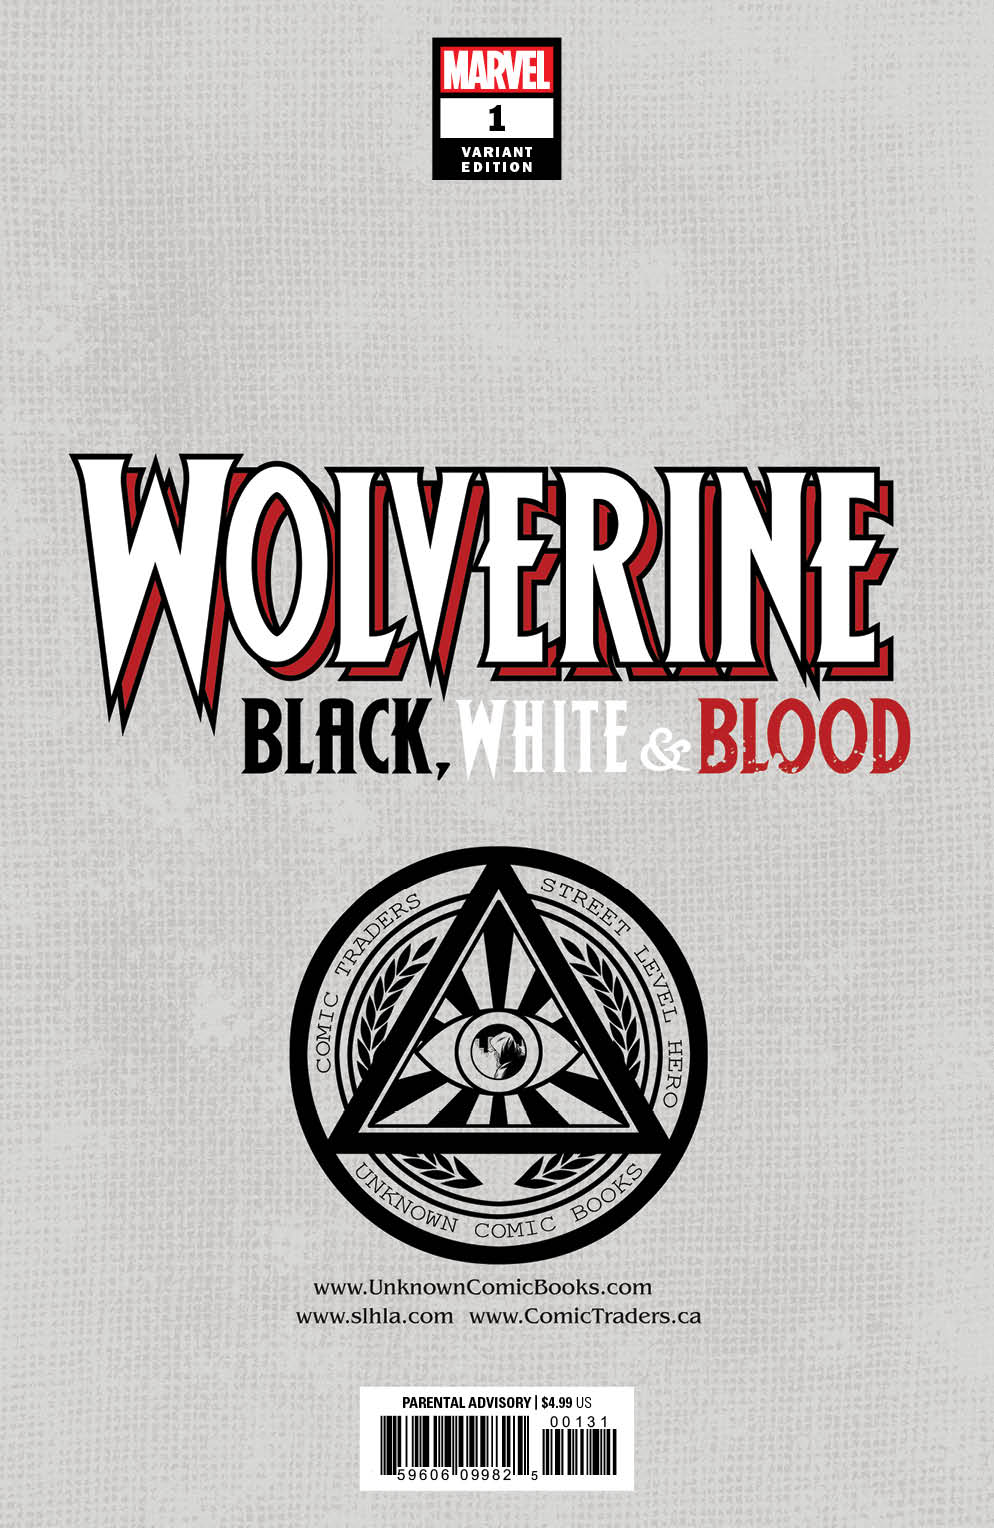 WOLVERINE BLACK WHITE BLOOD #1 (OF 4) UNKNOWN COMICS TYLER KIRKHAM EXCLUSIVE VIRGIN VAR (11/04/2020)